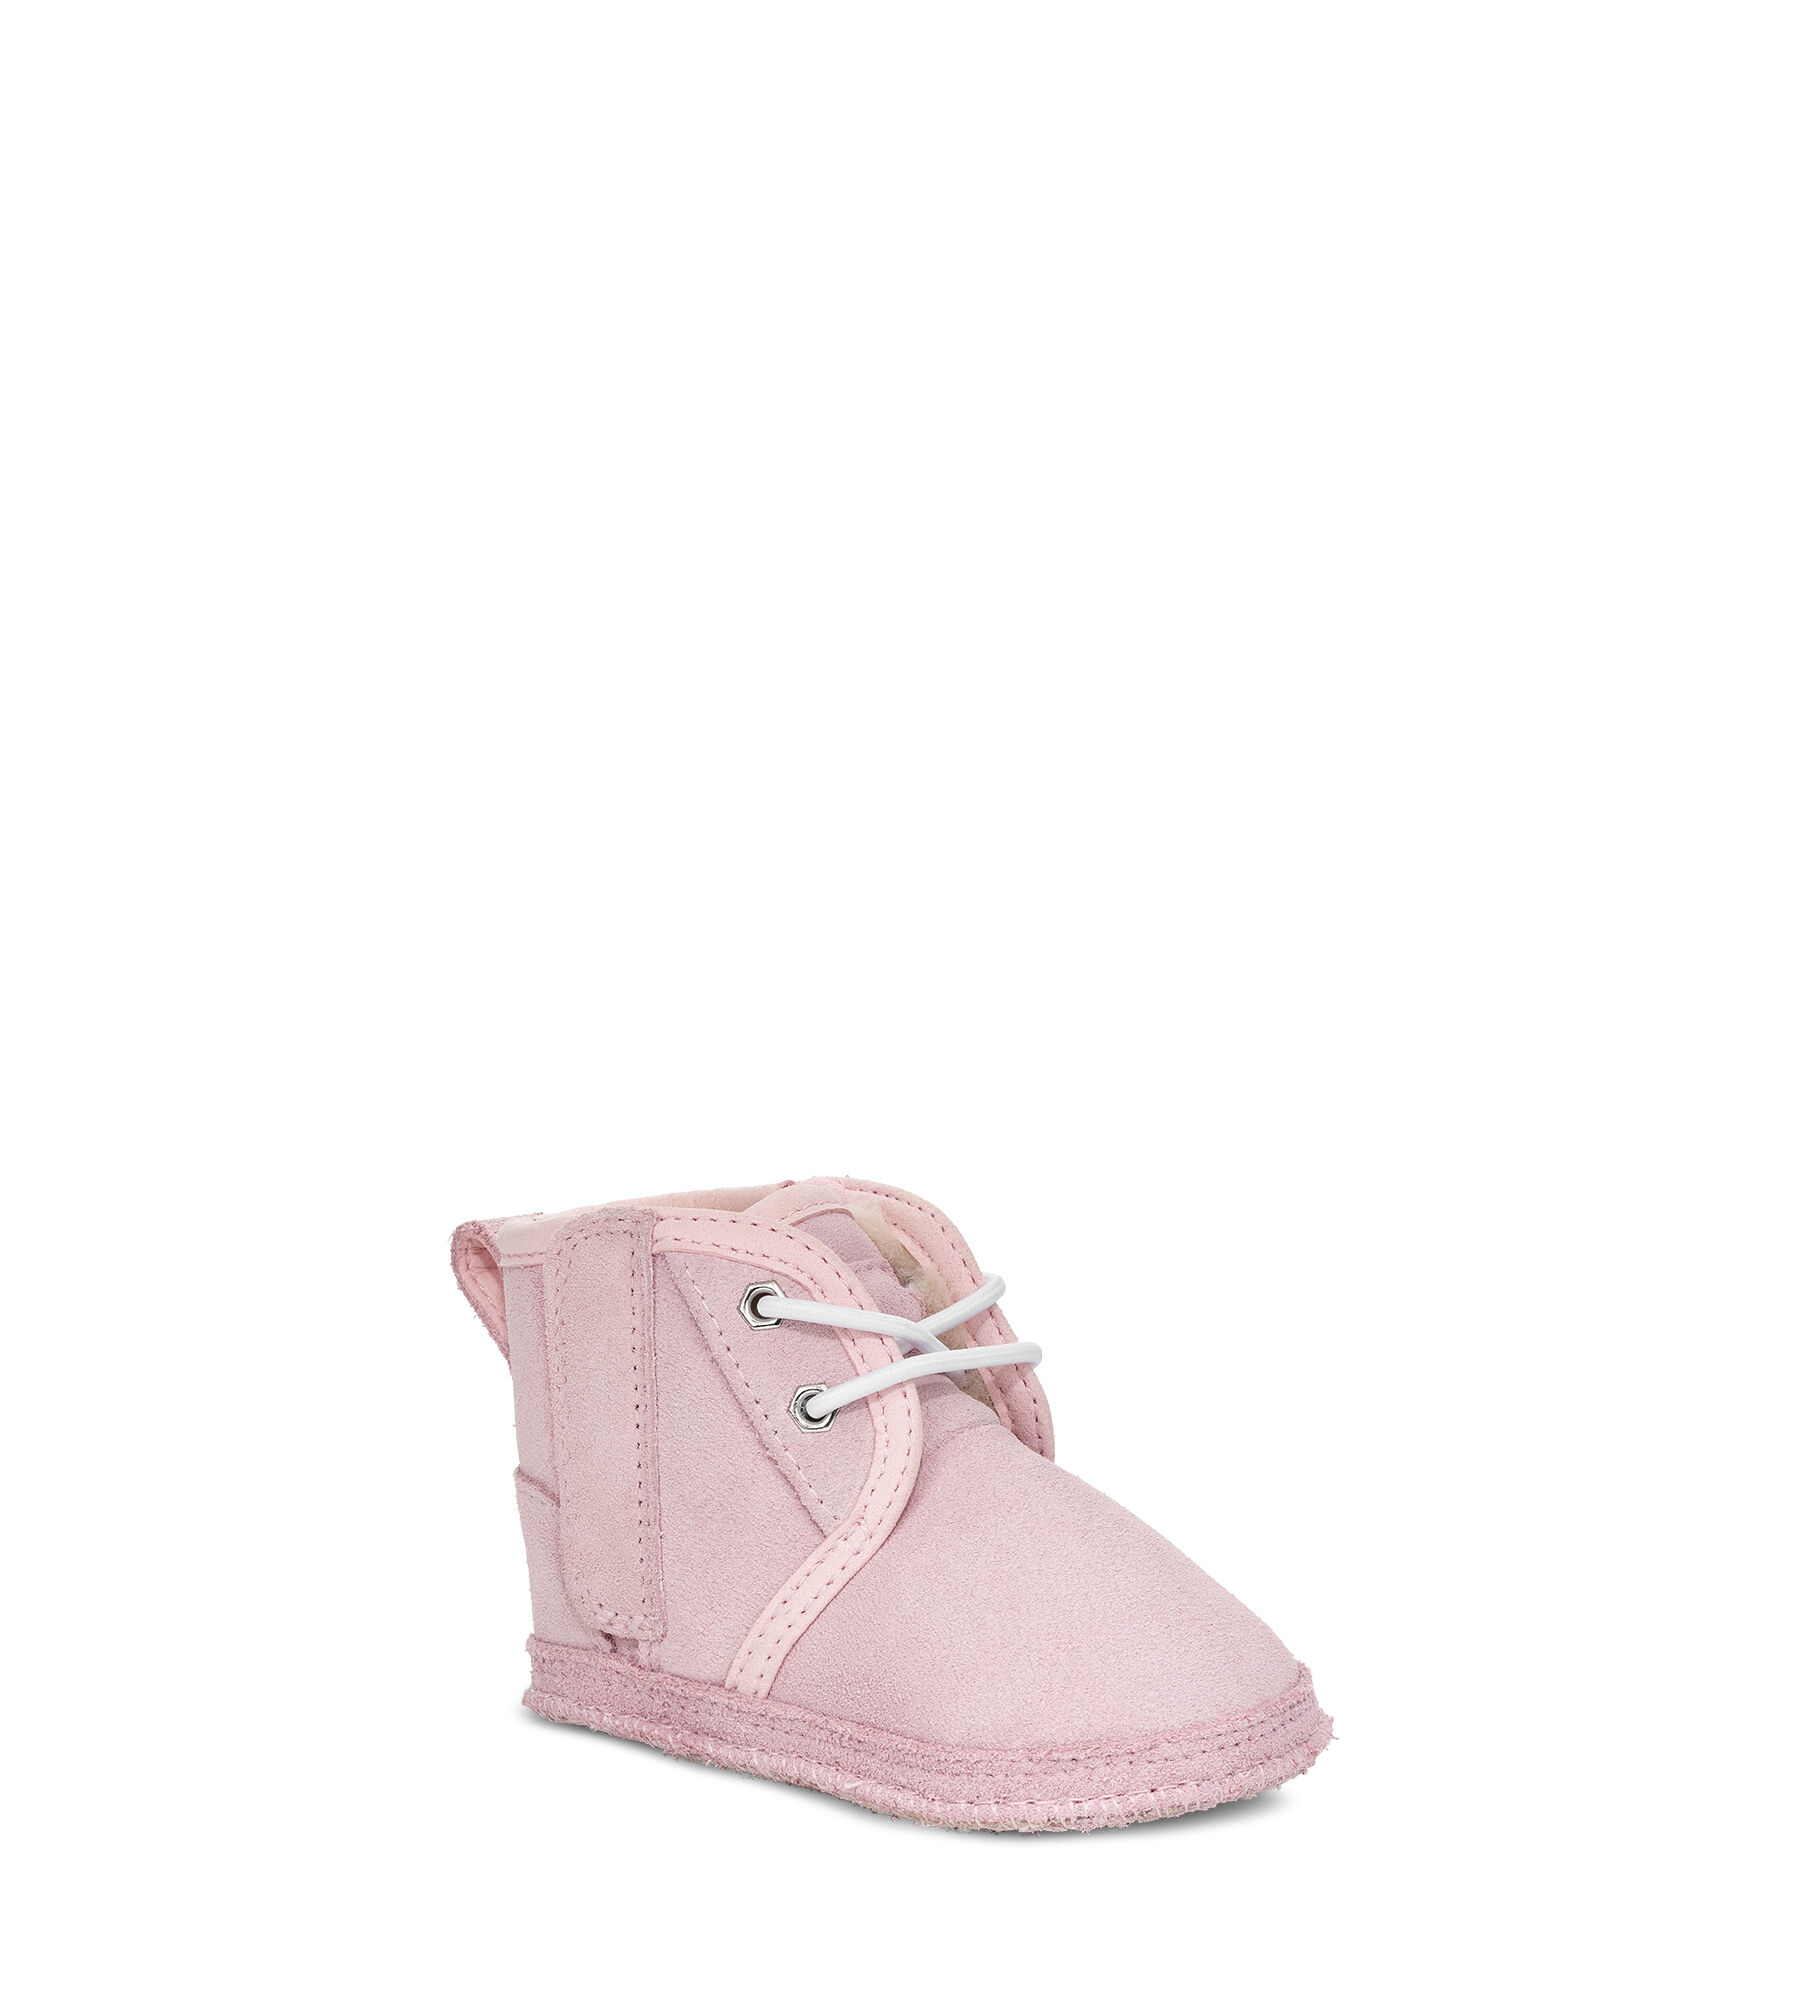 ugg slippers for infants